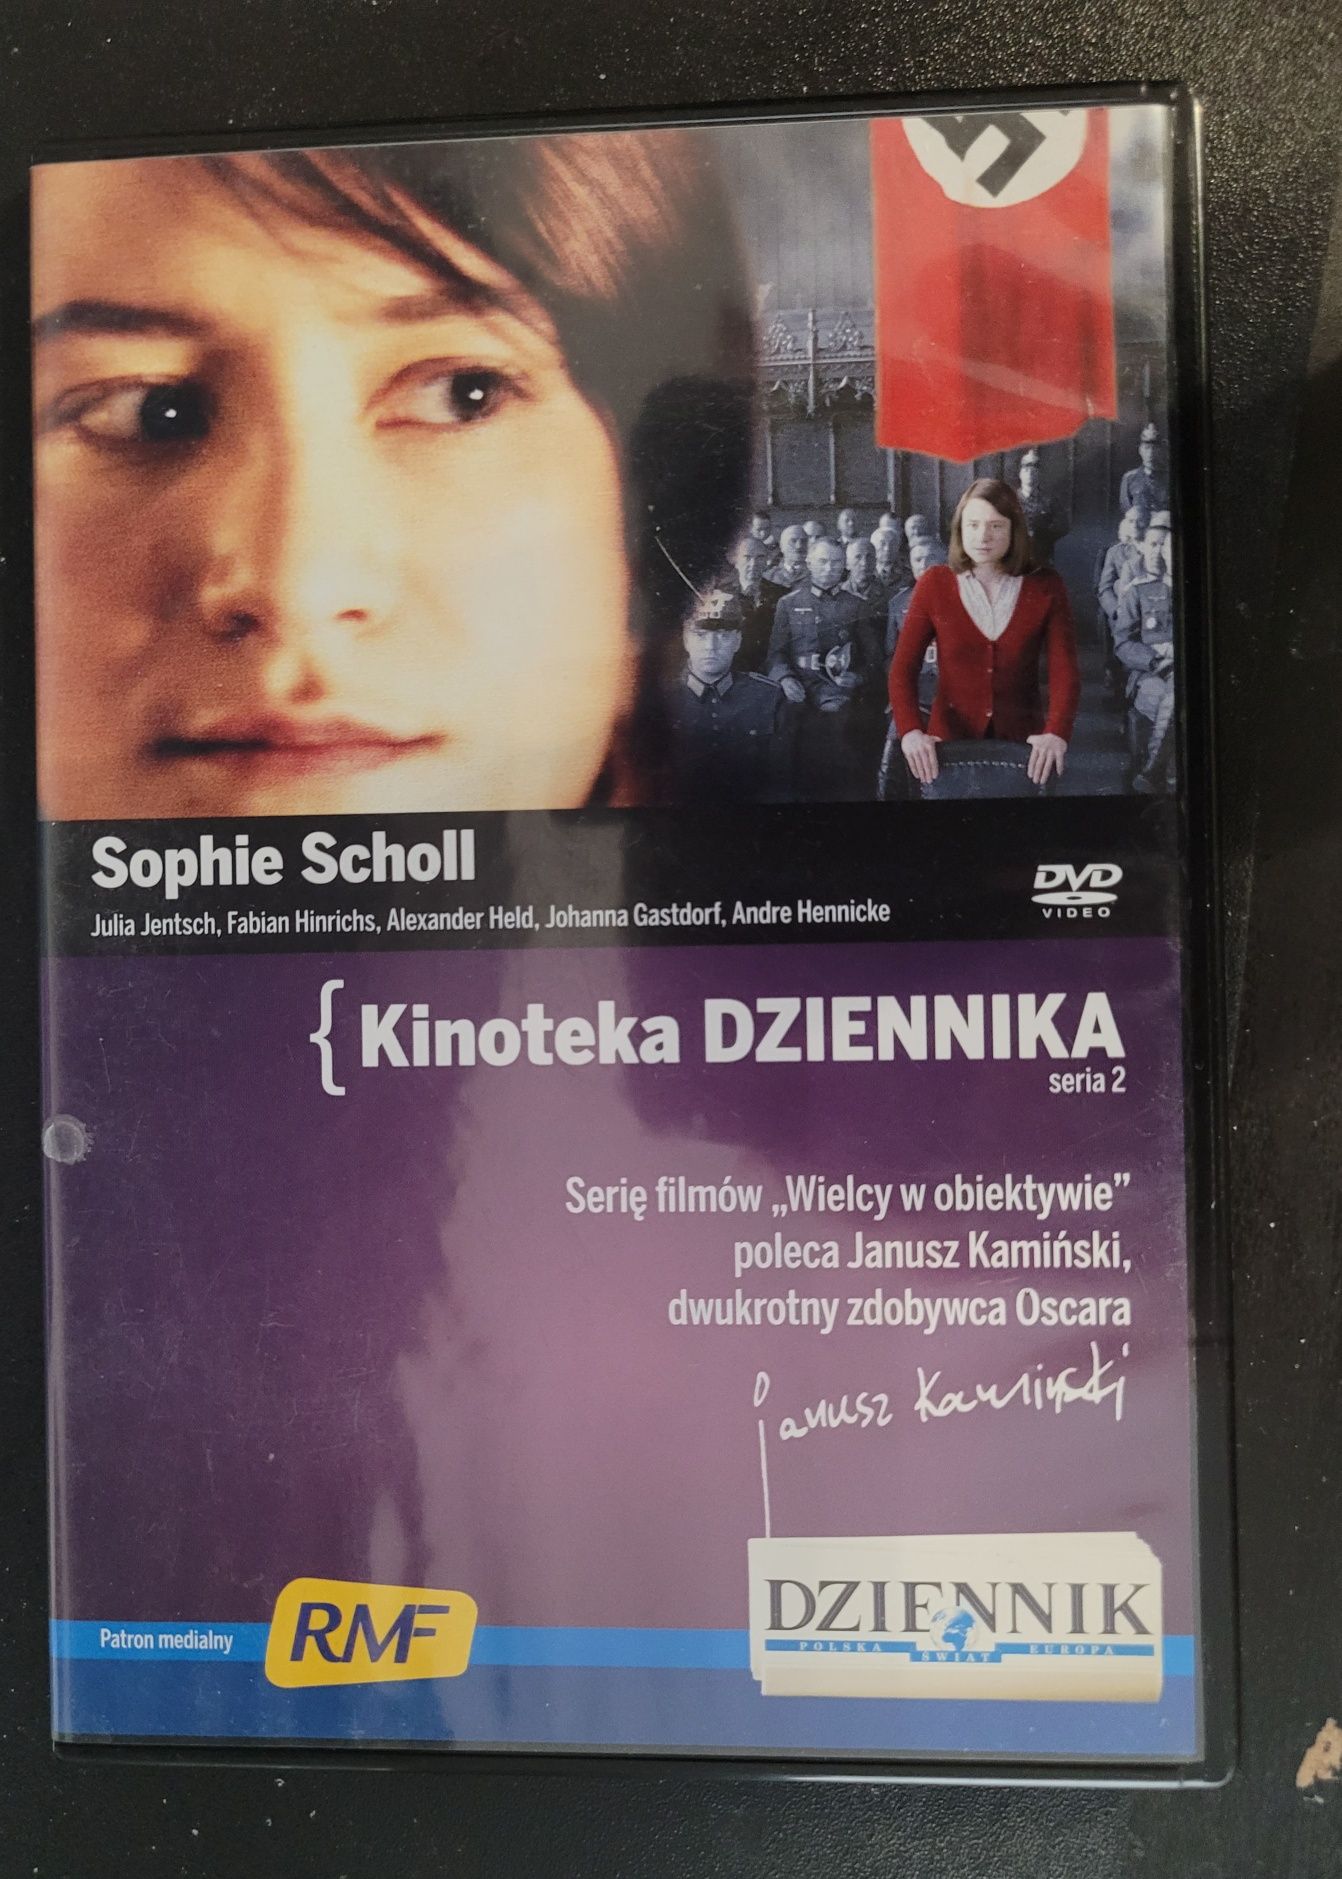 Sophie Scholl film DVD